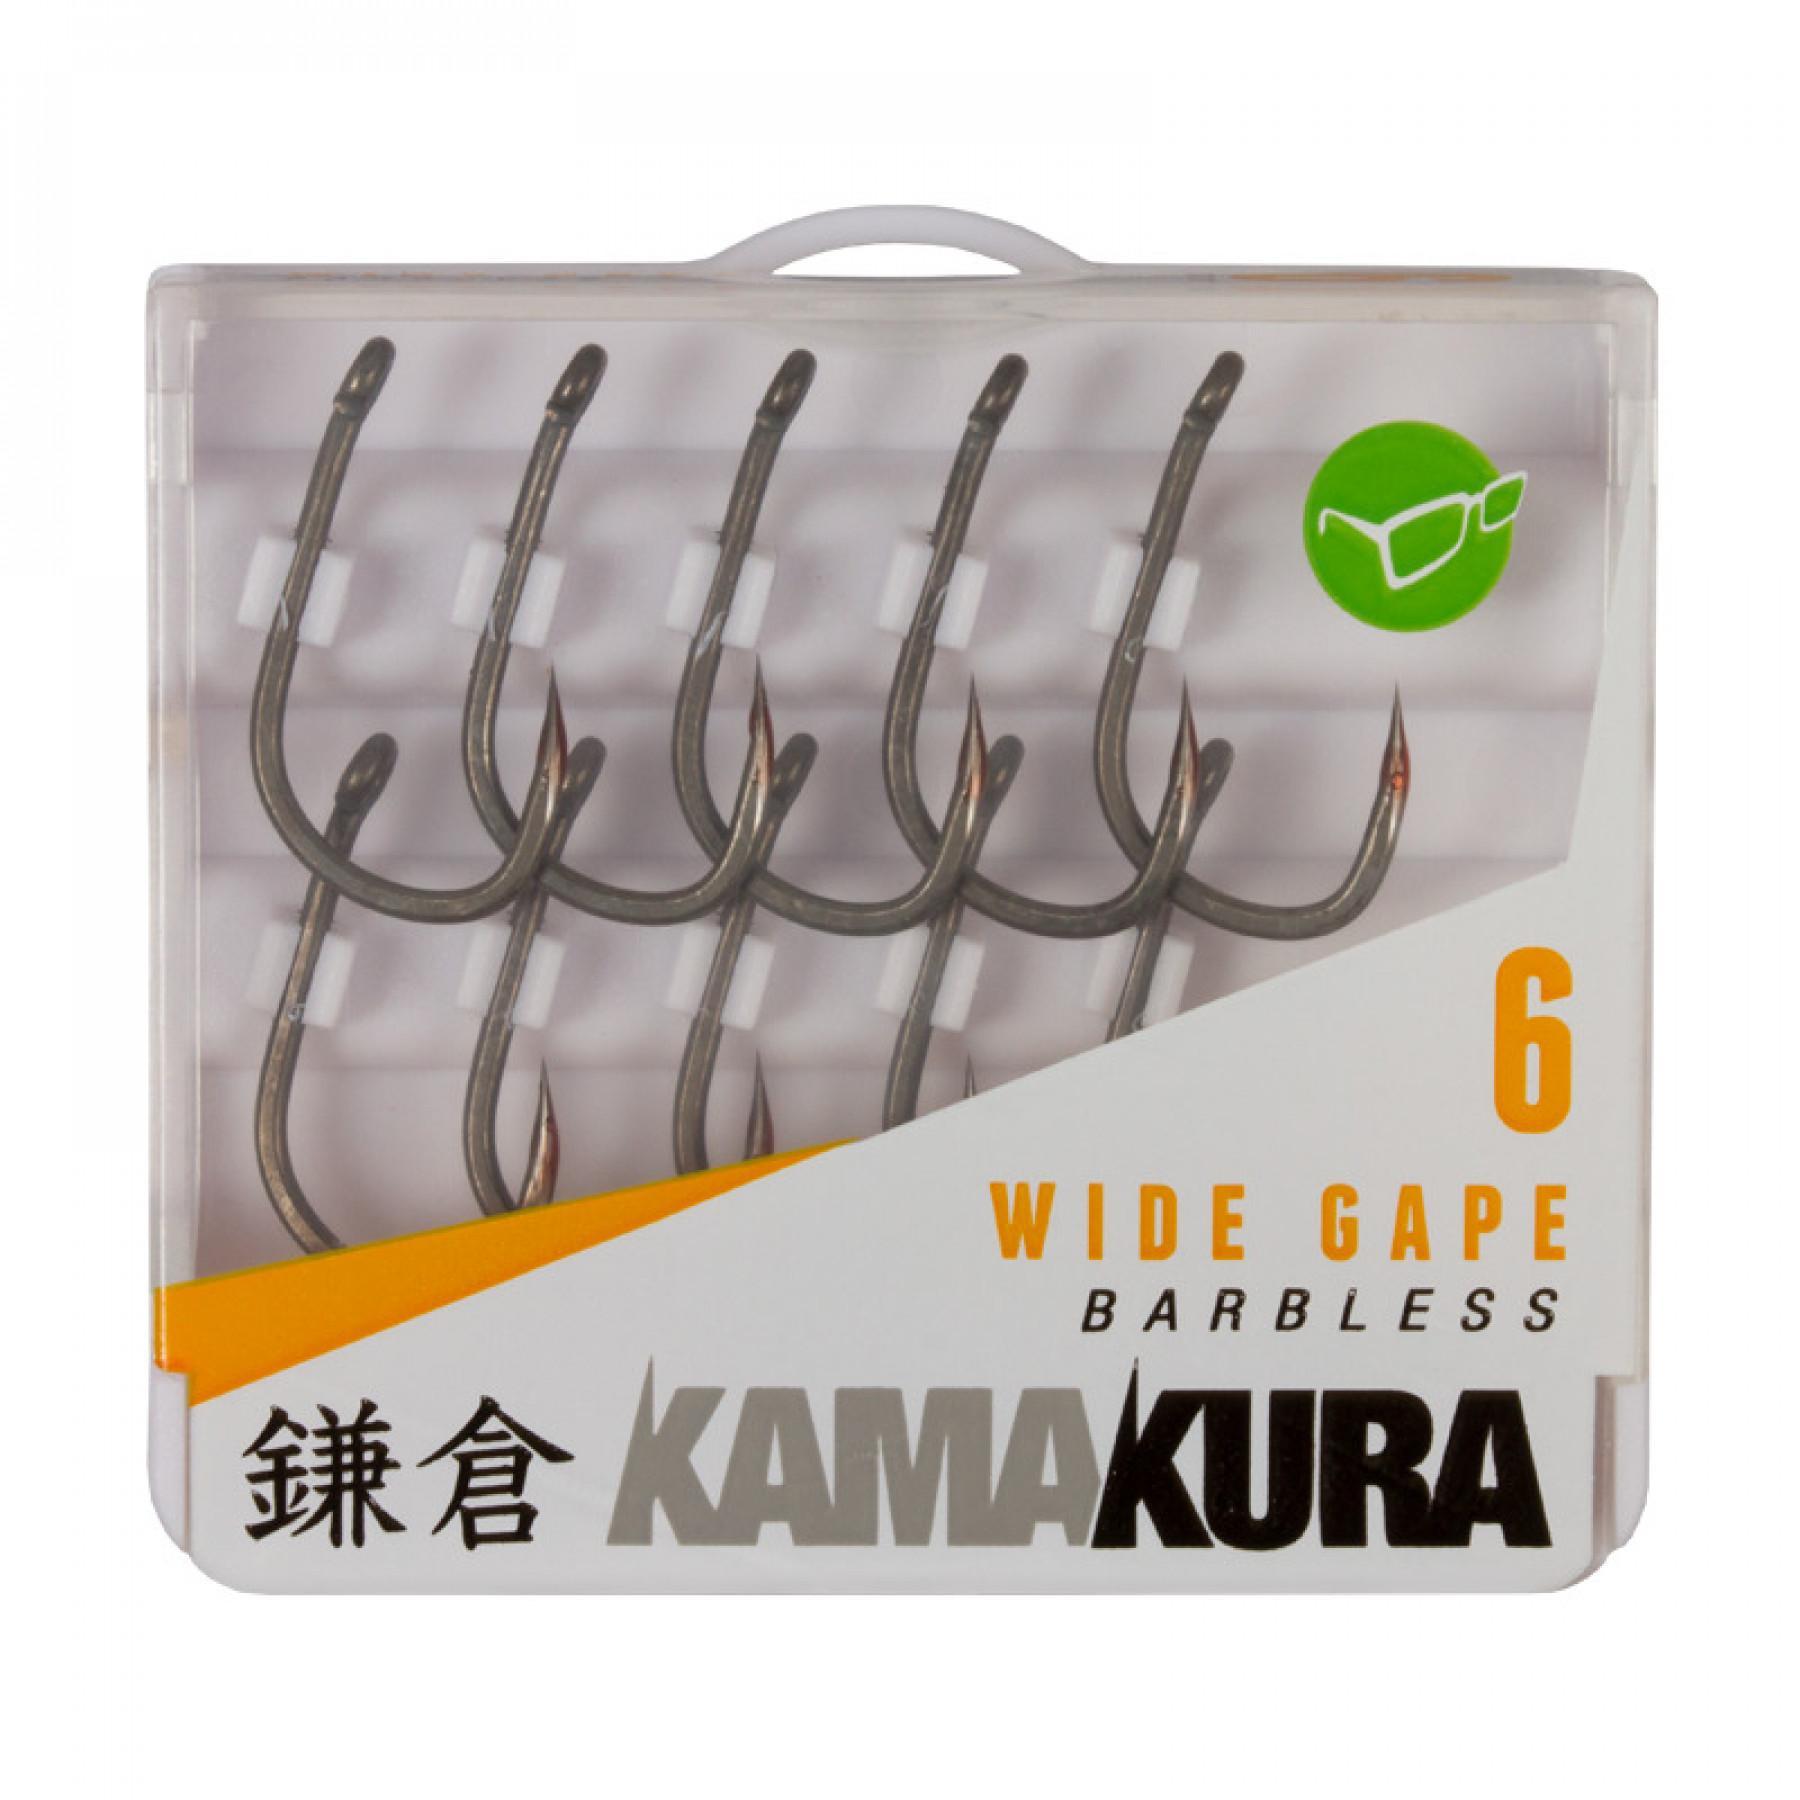 Gancho korda Kamakura Wide Gape Barbless S6